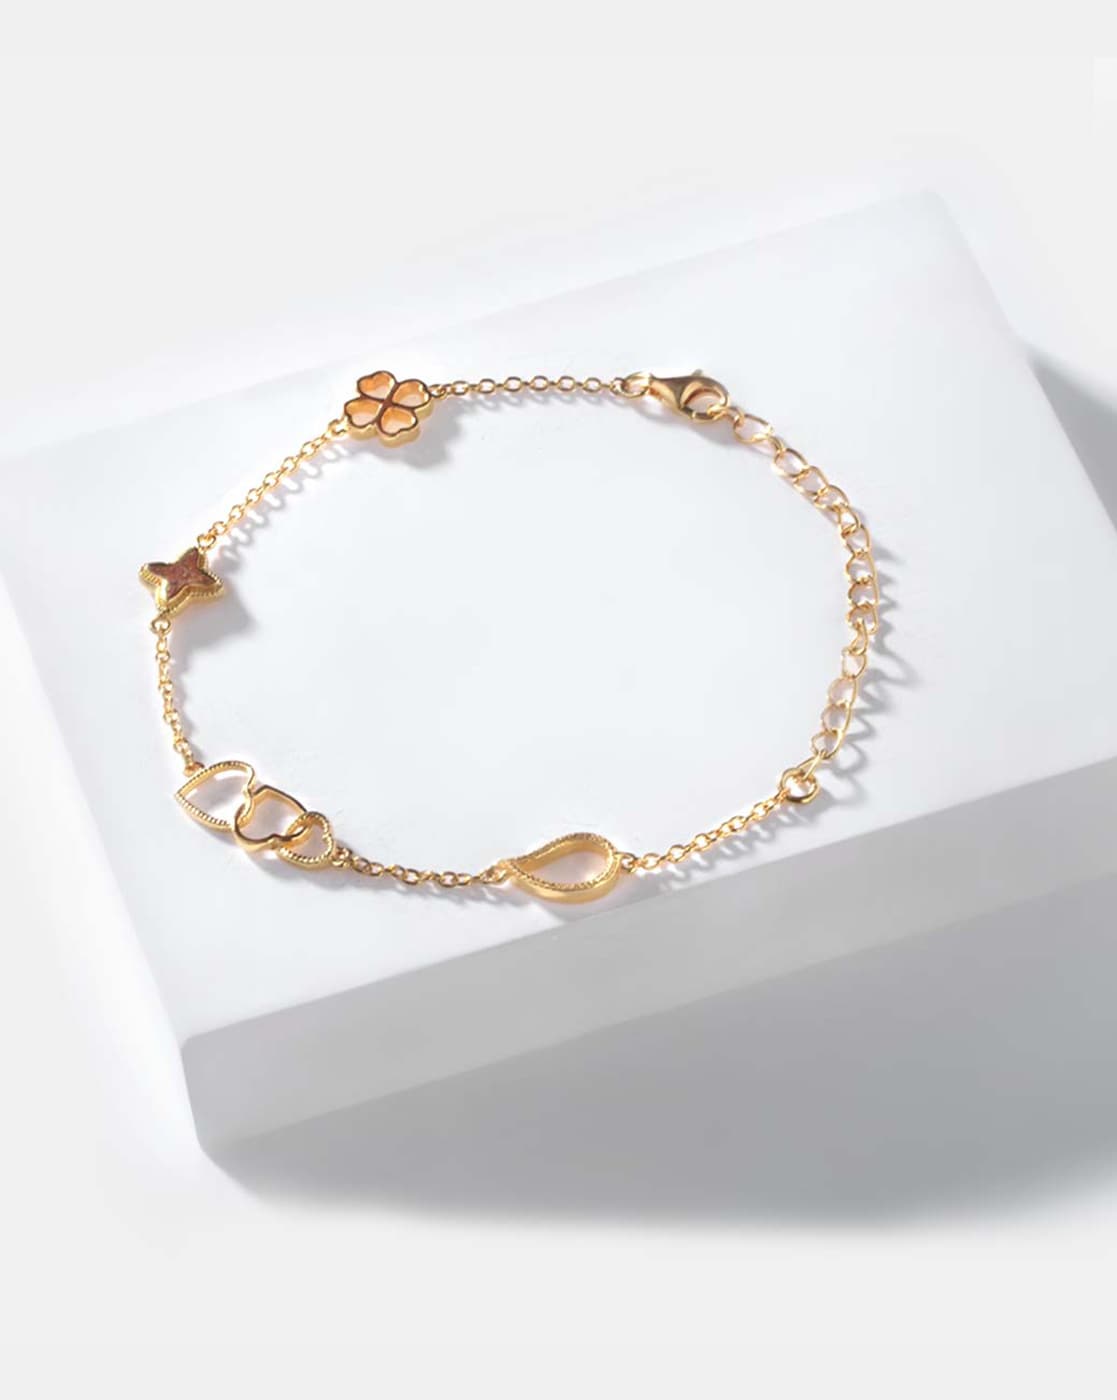 Simplebeautiful charm bracelet in 22kt gold 22ktgold bracelets  Gold  jewellery design necklaces Gold jewelry fashion Jewelry bracelets gold